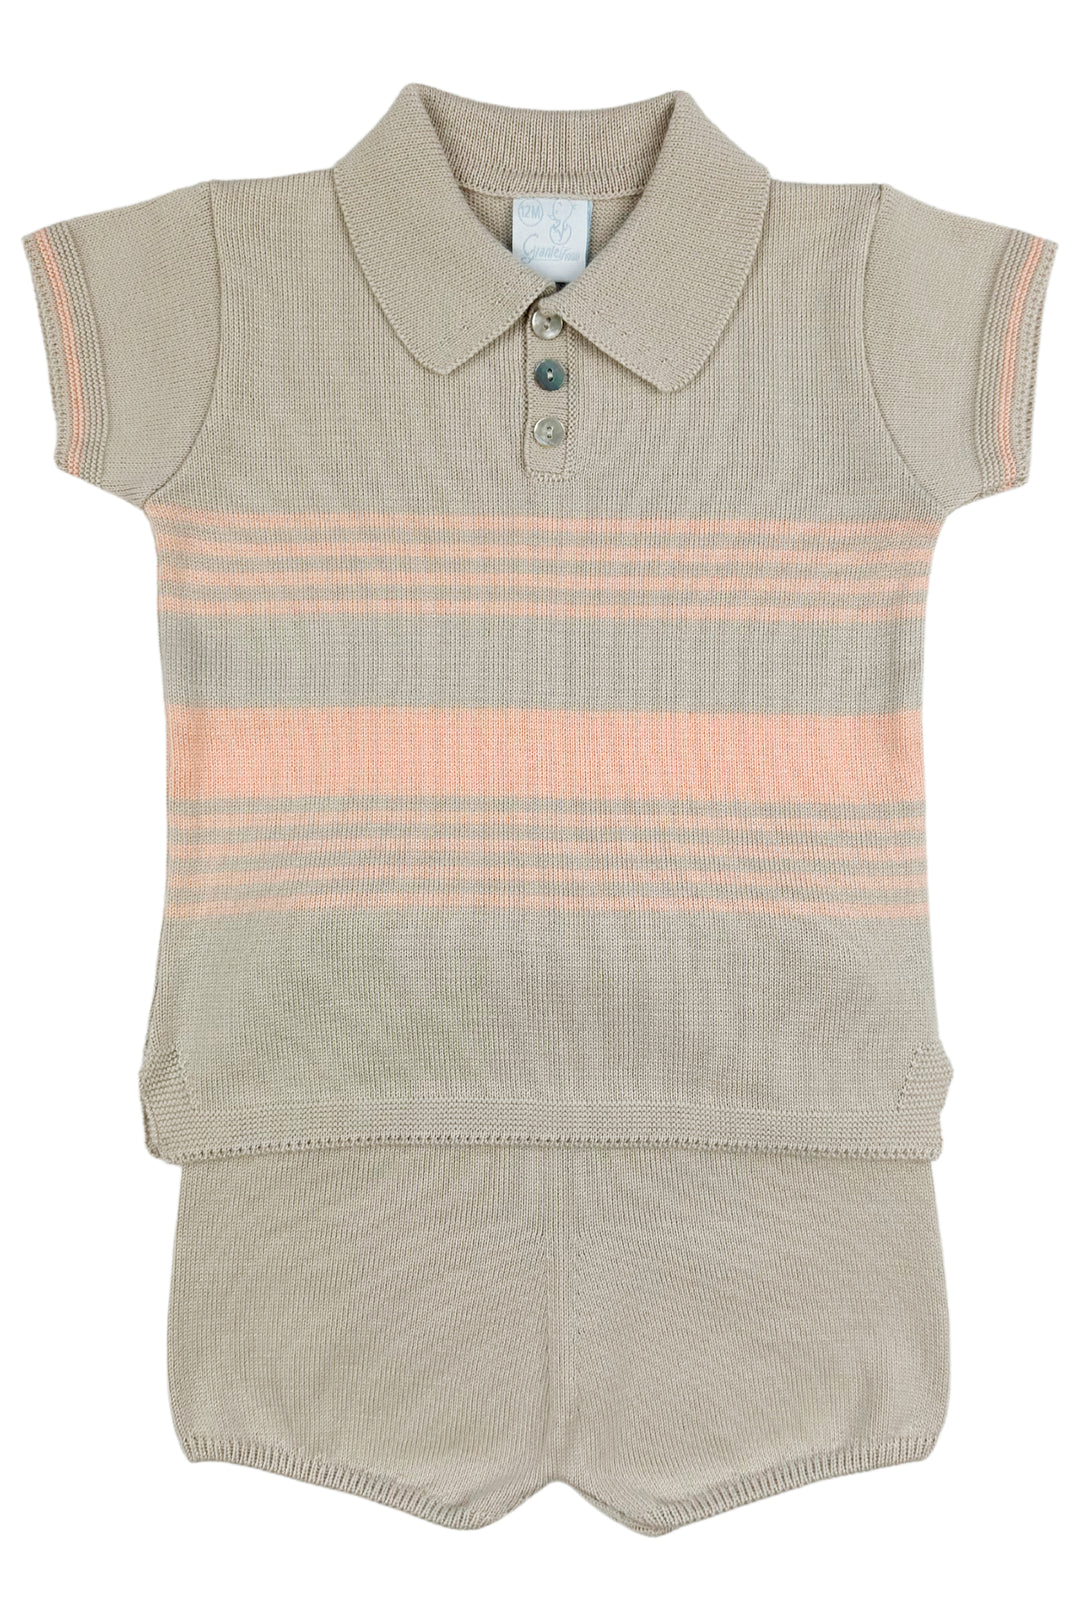 Granlei "Timmy" Stone & Peach Stripe Knit Top & Shorts | Millie and John